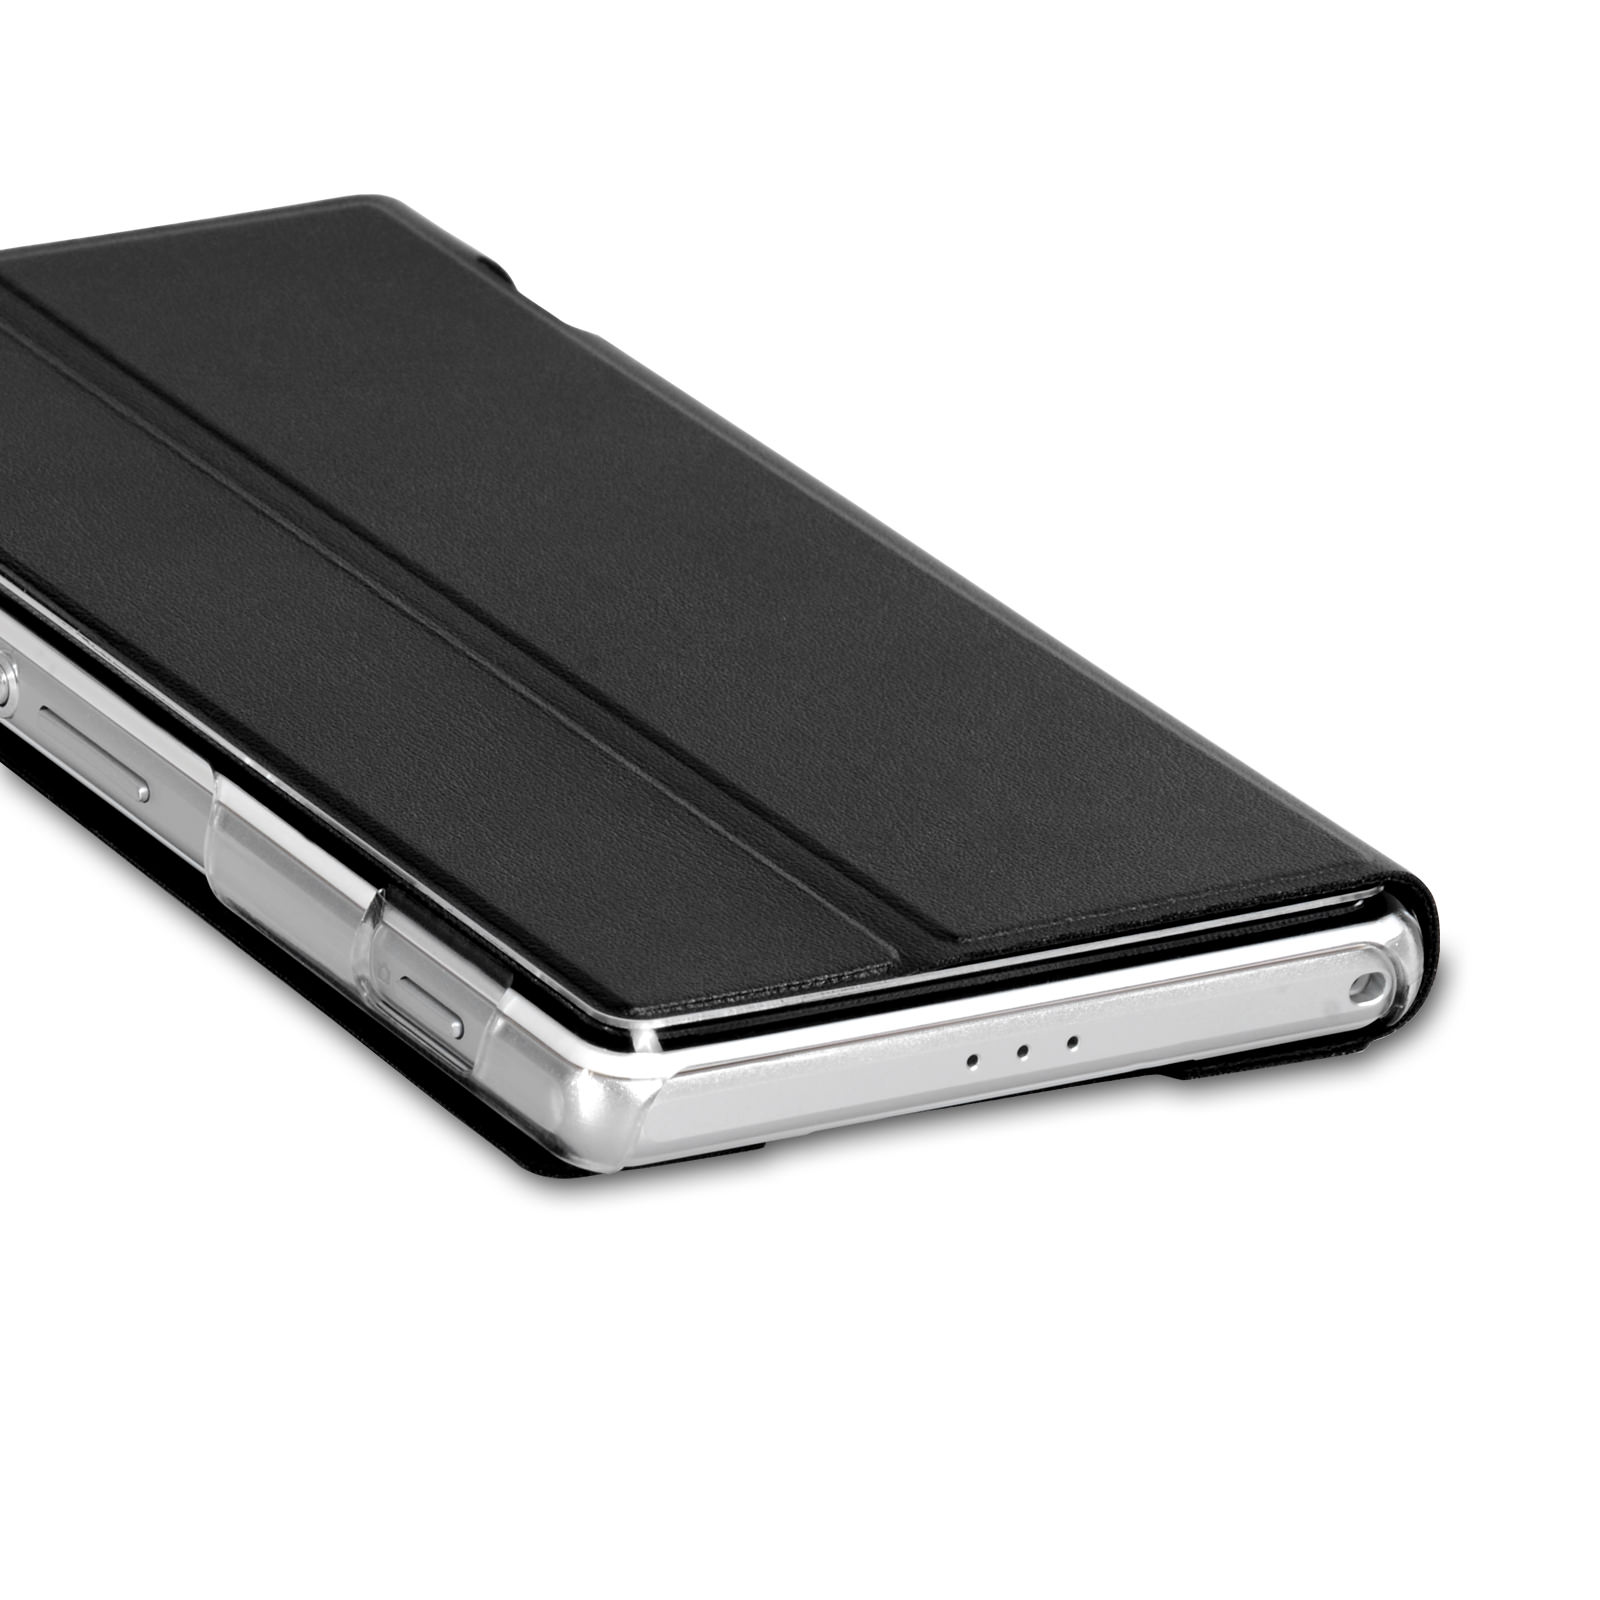 Roxfit Standing Book Case for Sony Xperia Z2 - Nero Black